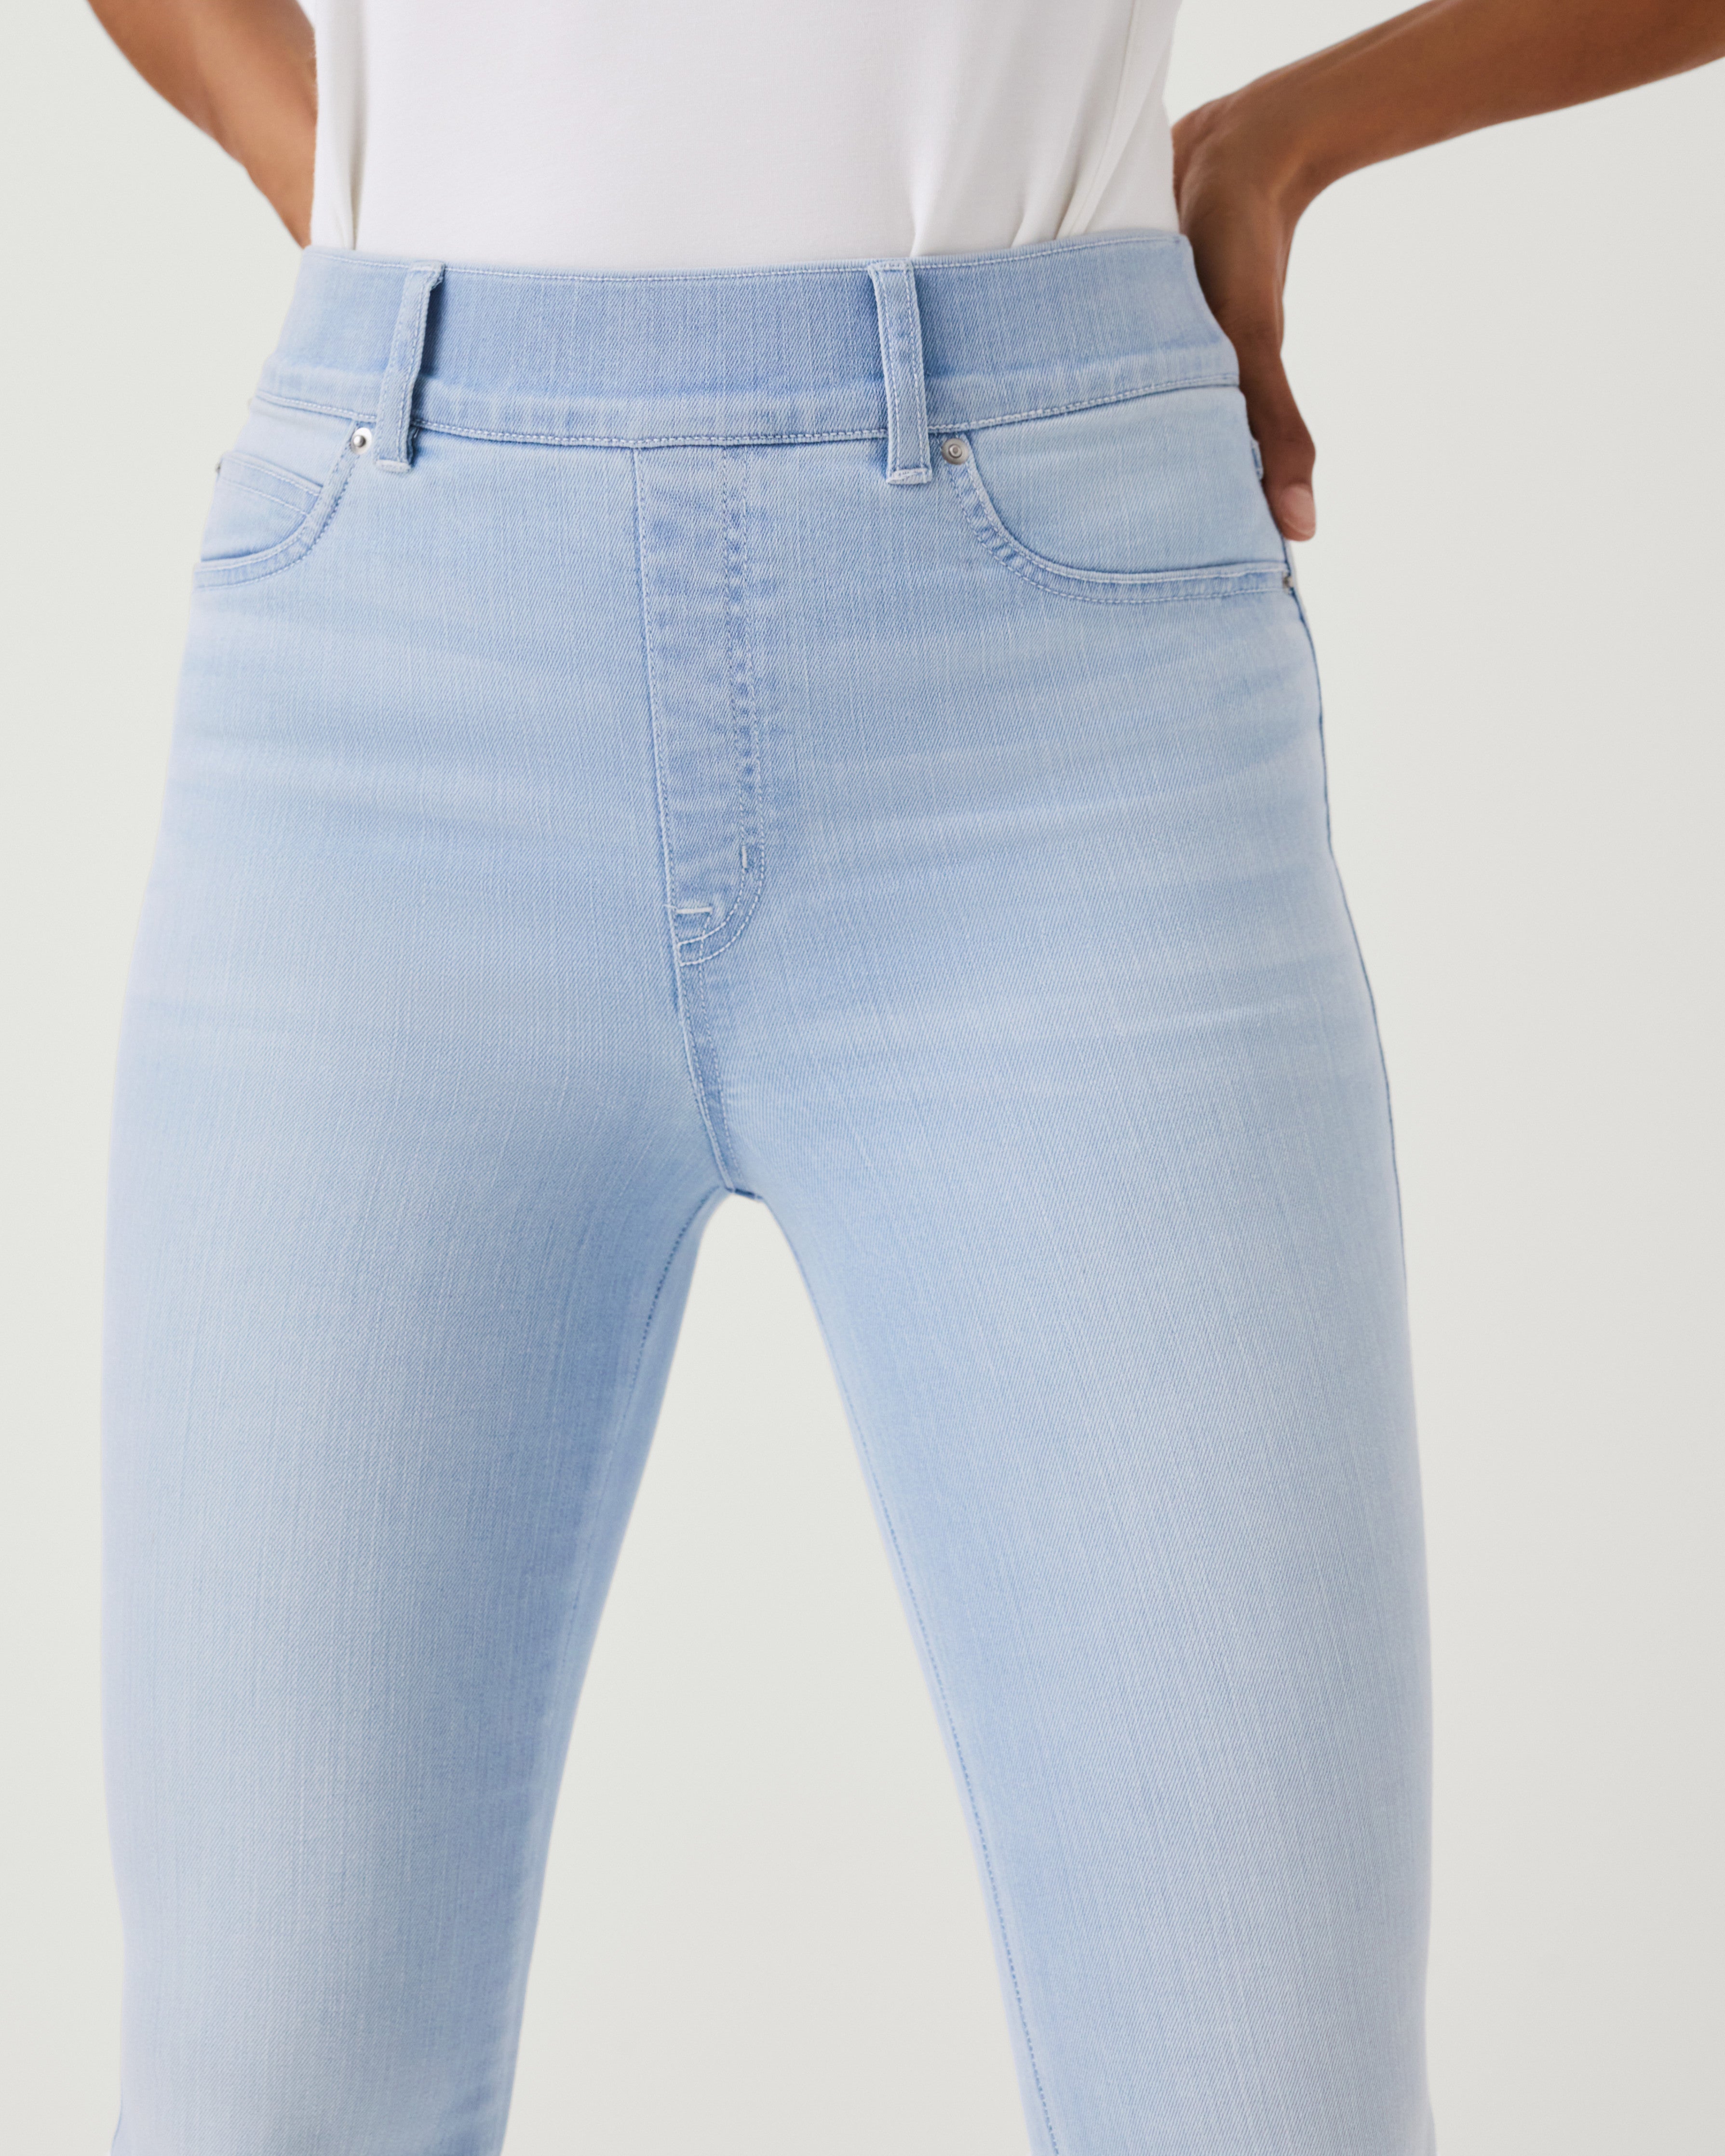 Spanx flare jeans - Petite 29” inseam